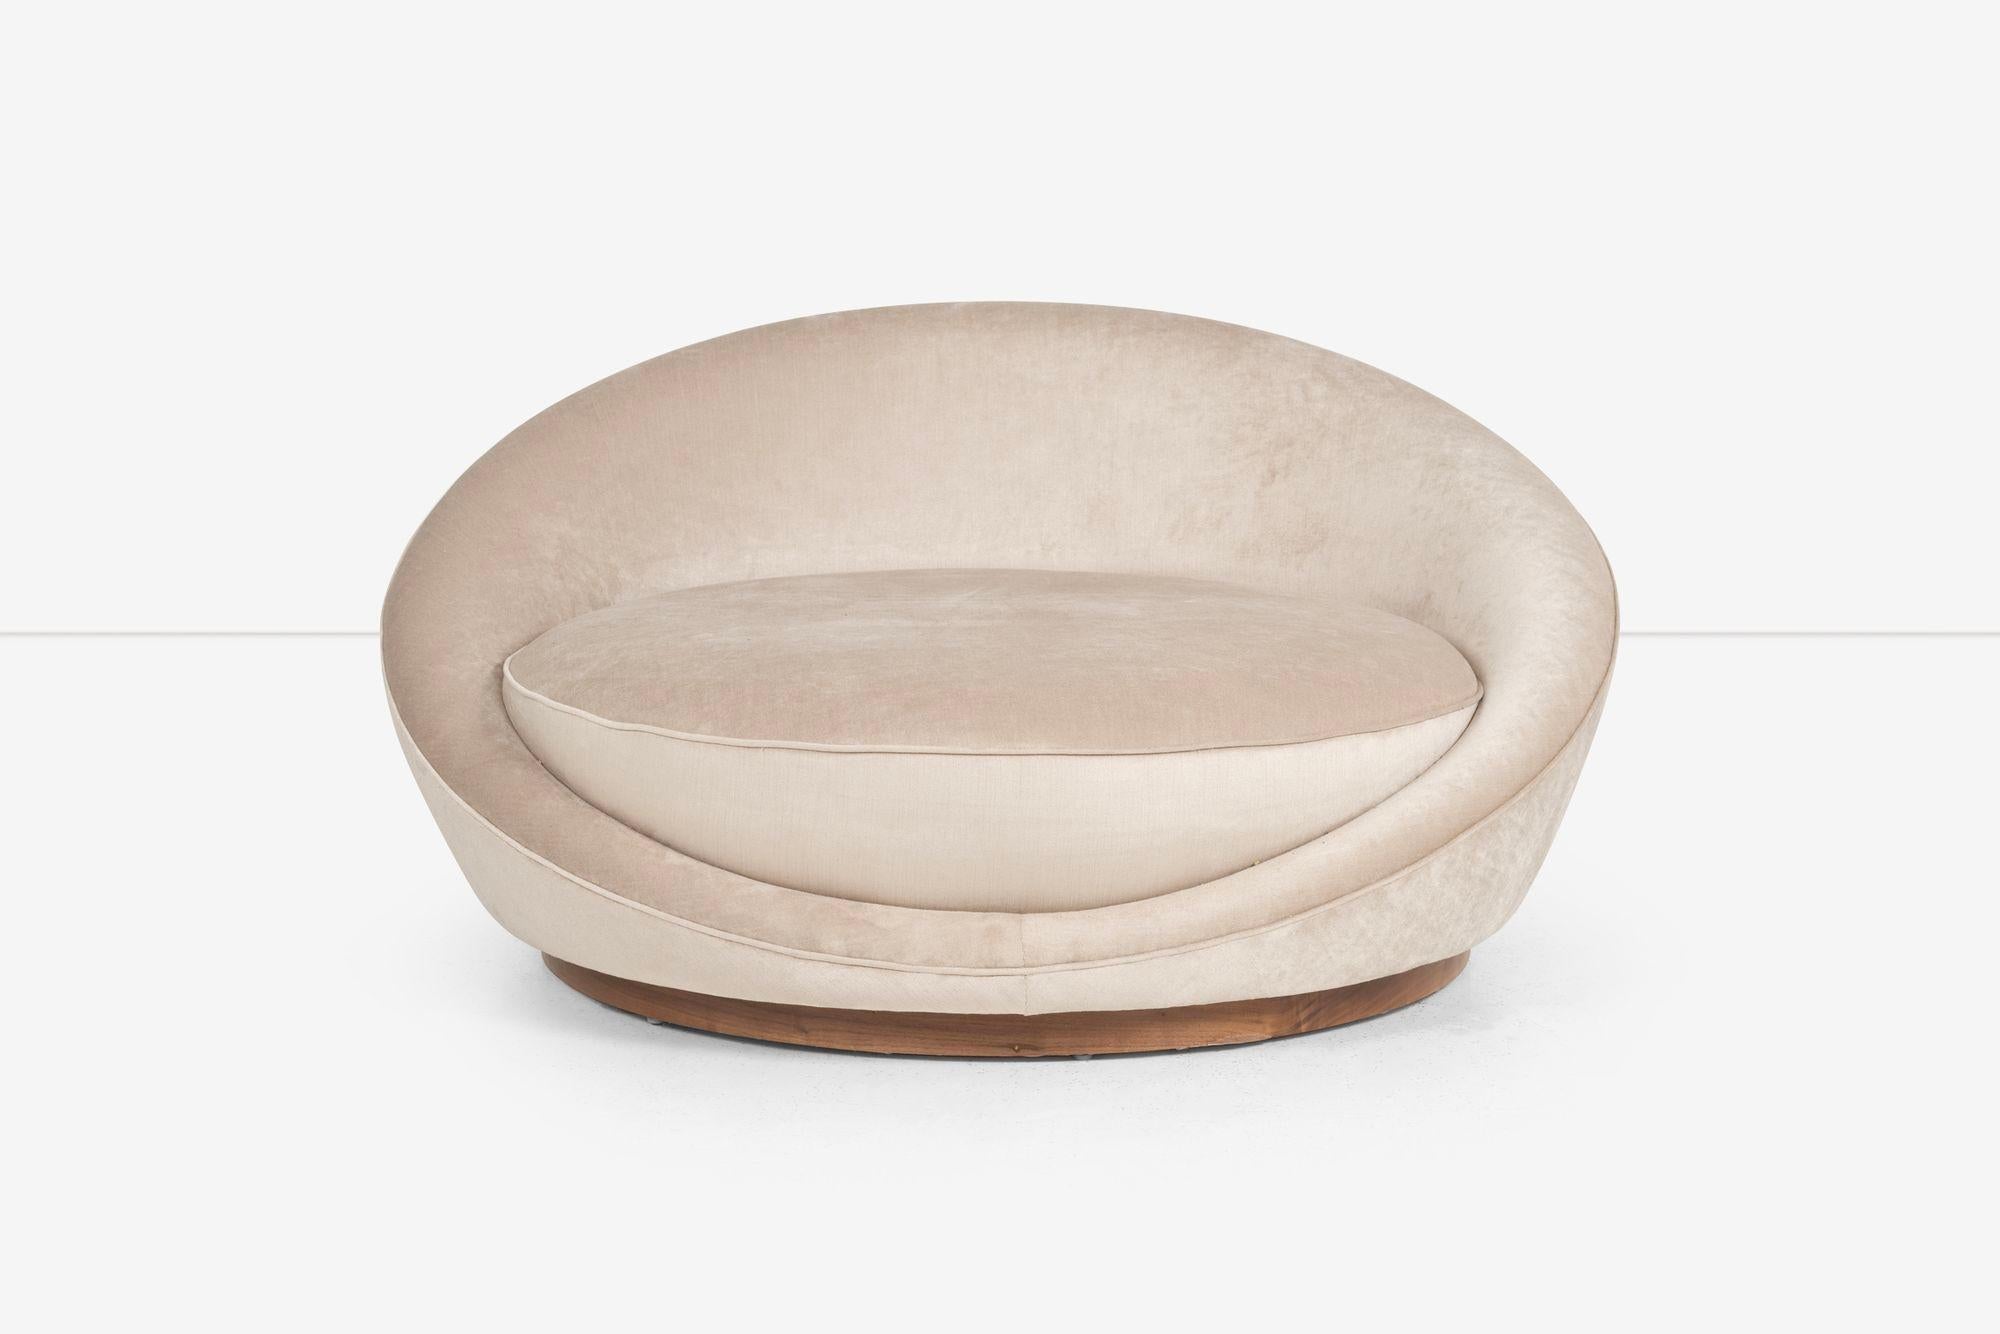 Milo Baufmanm Satellite Chaise, upholstered with cotton velvet, base walnut veneer.

Dimensions:
29